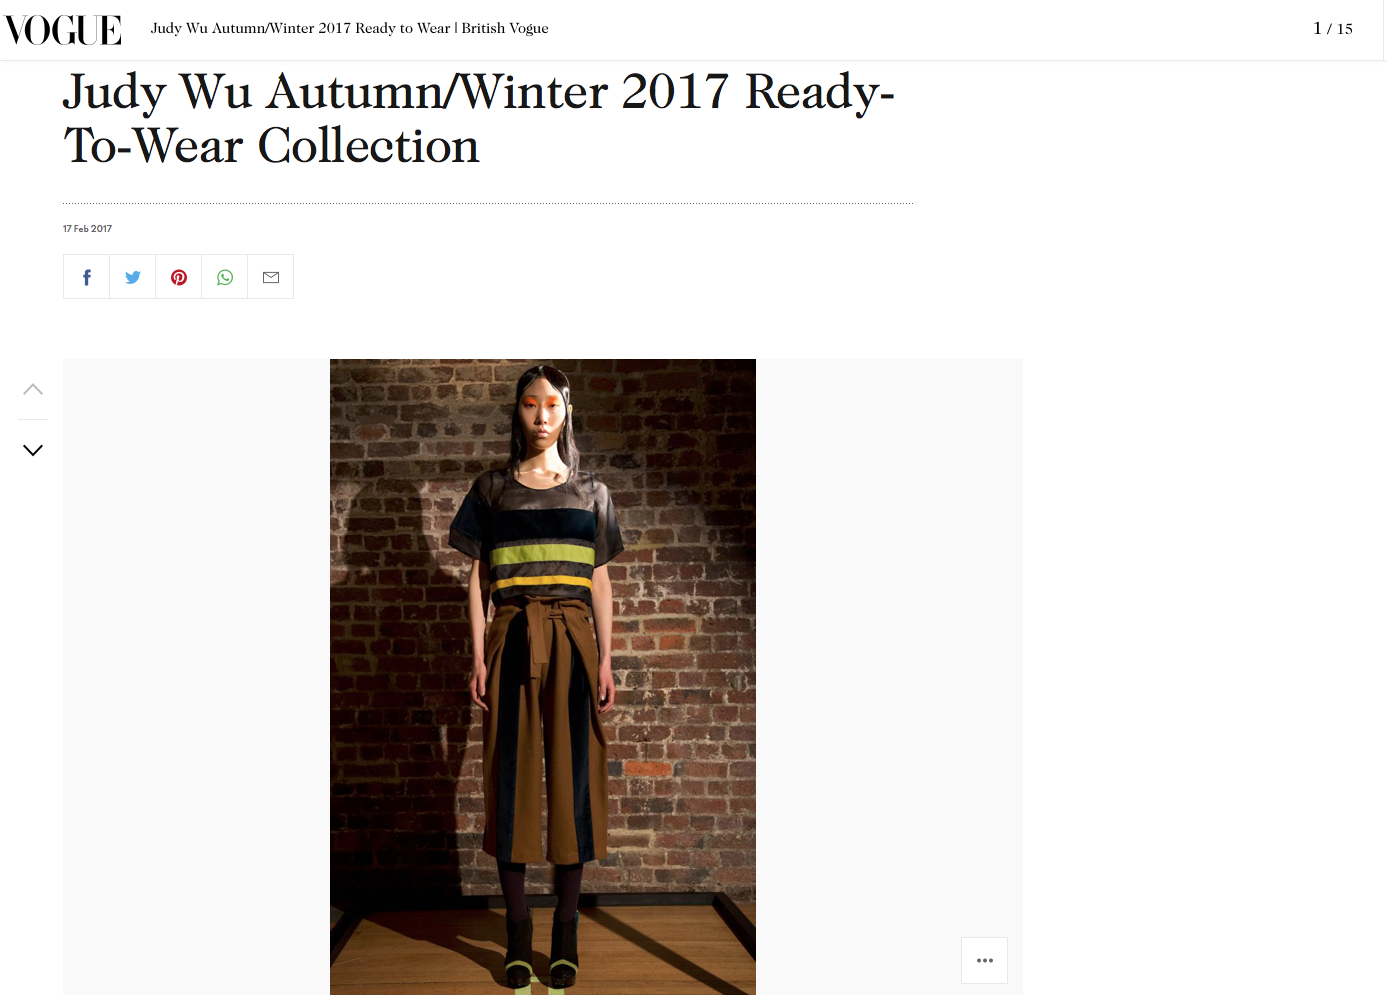 Copy of Judy Wu Autumn Winter 2017 Vogue